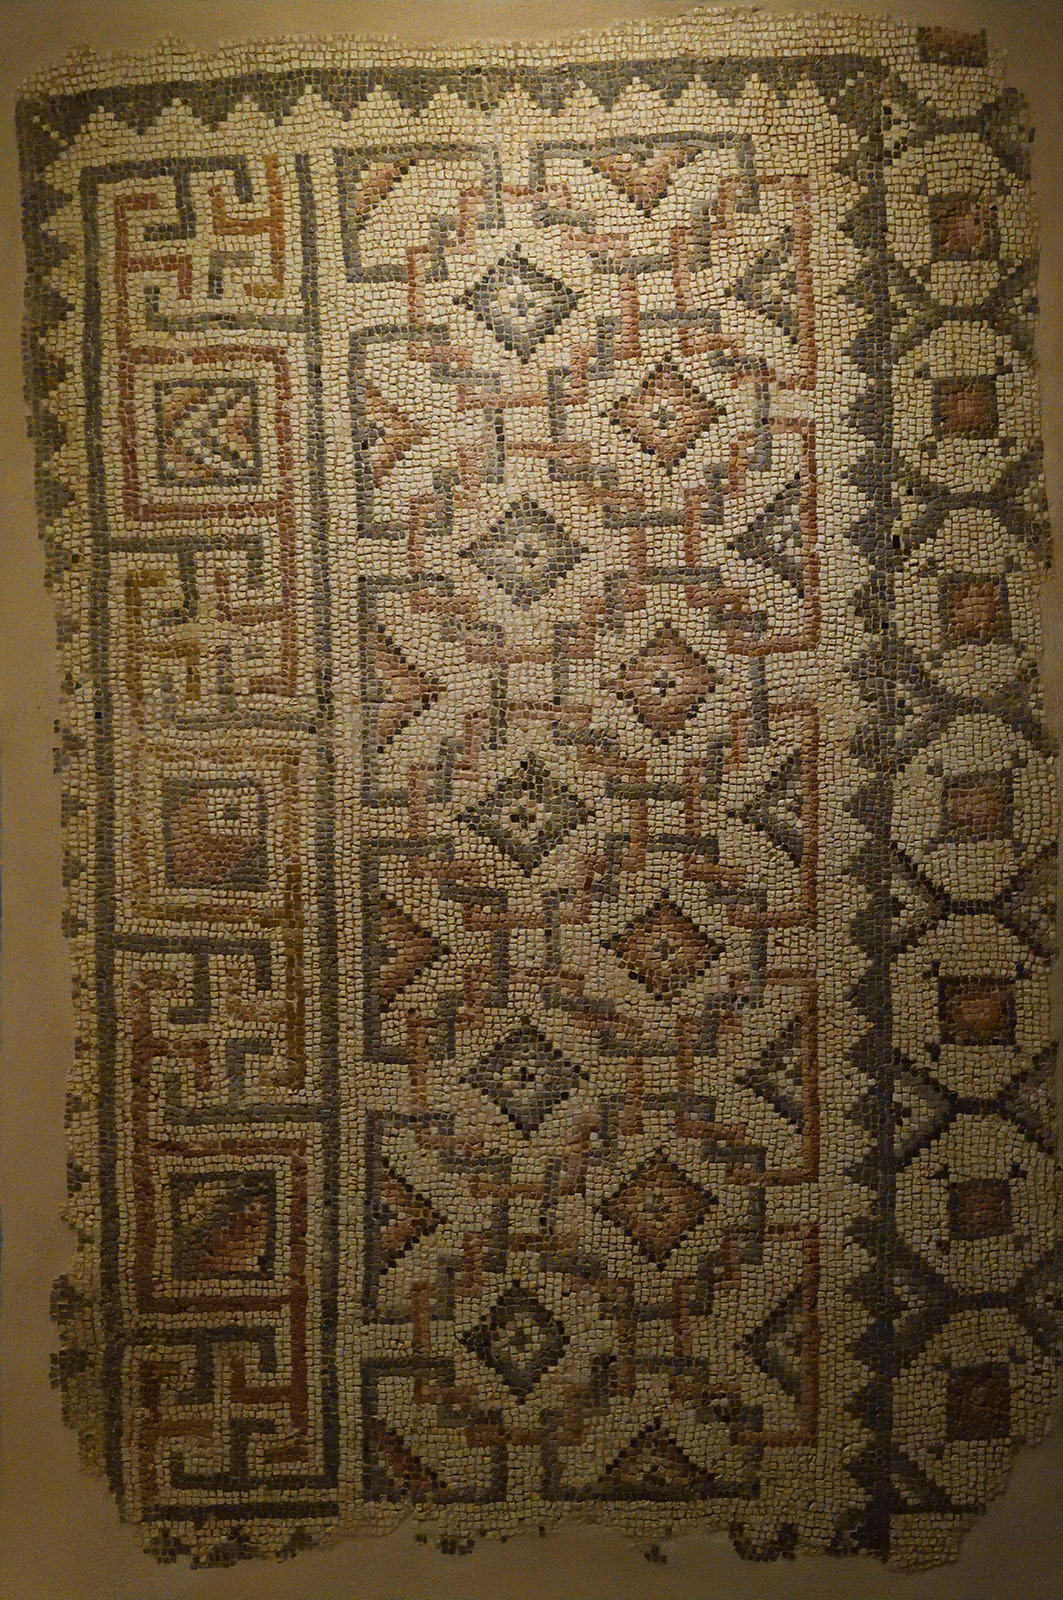 Gaziantep Zeugma museum Saridere mosaic sept 2019 4191.jpg